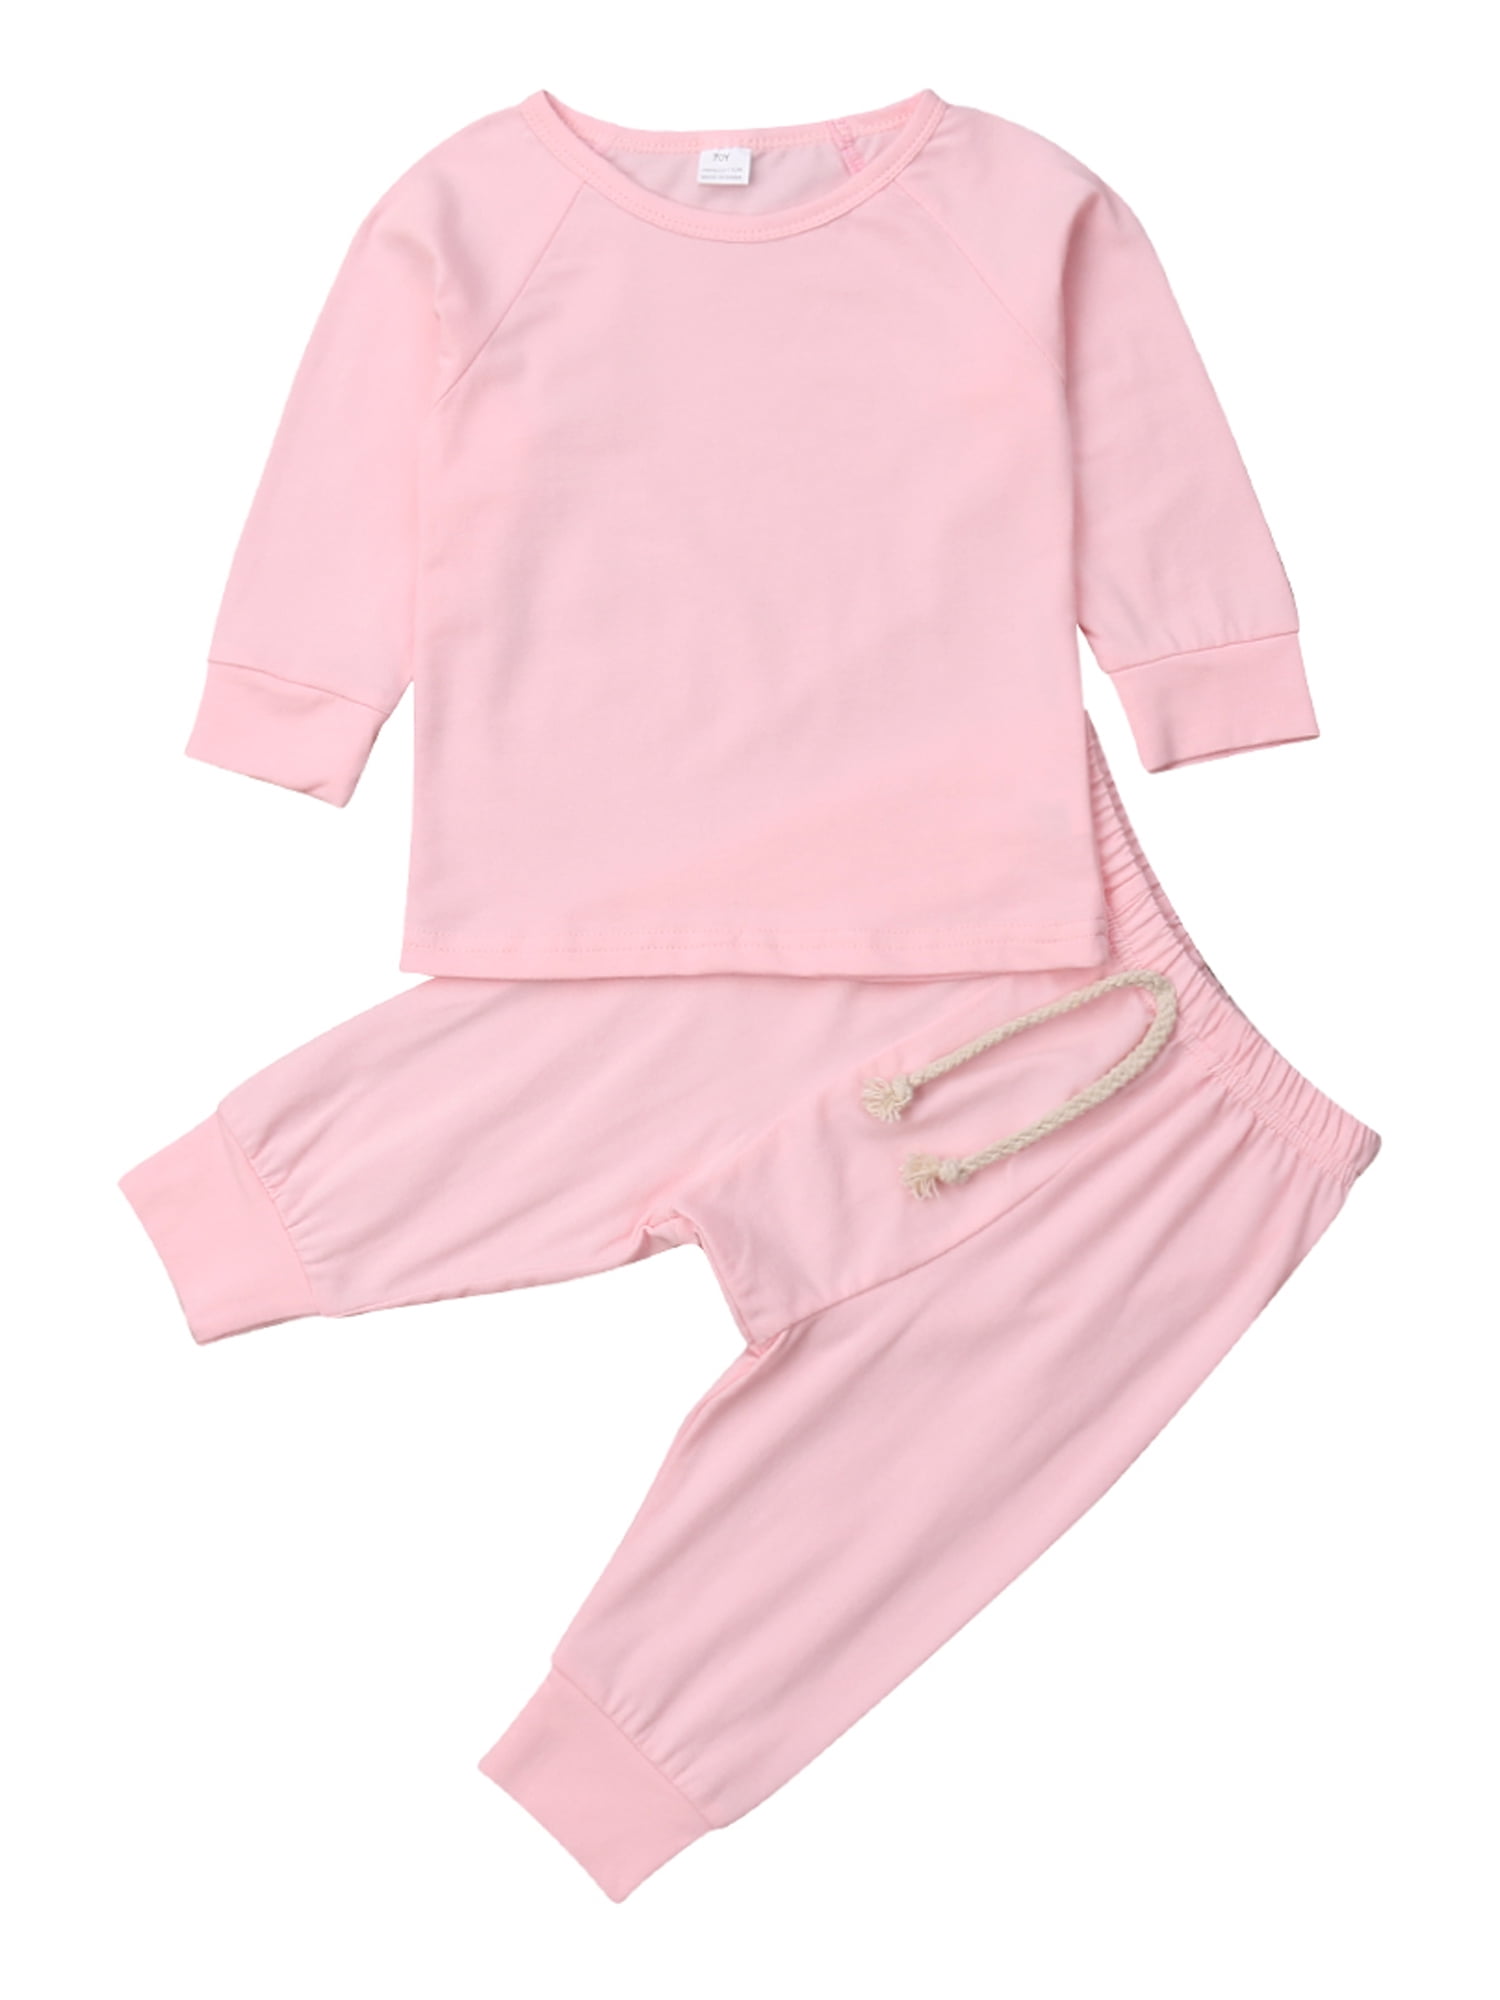 Eyicmarn - Infant Baby Boy Girl Pajamas Pjs Set Sleepwear Nightwear ...